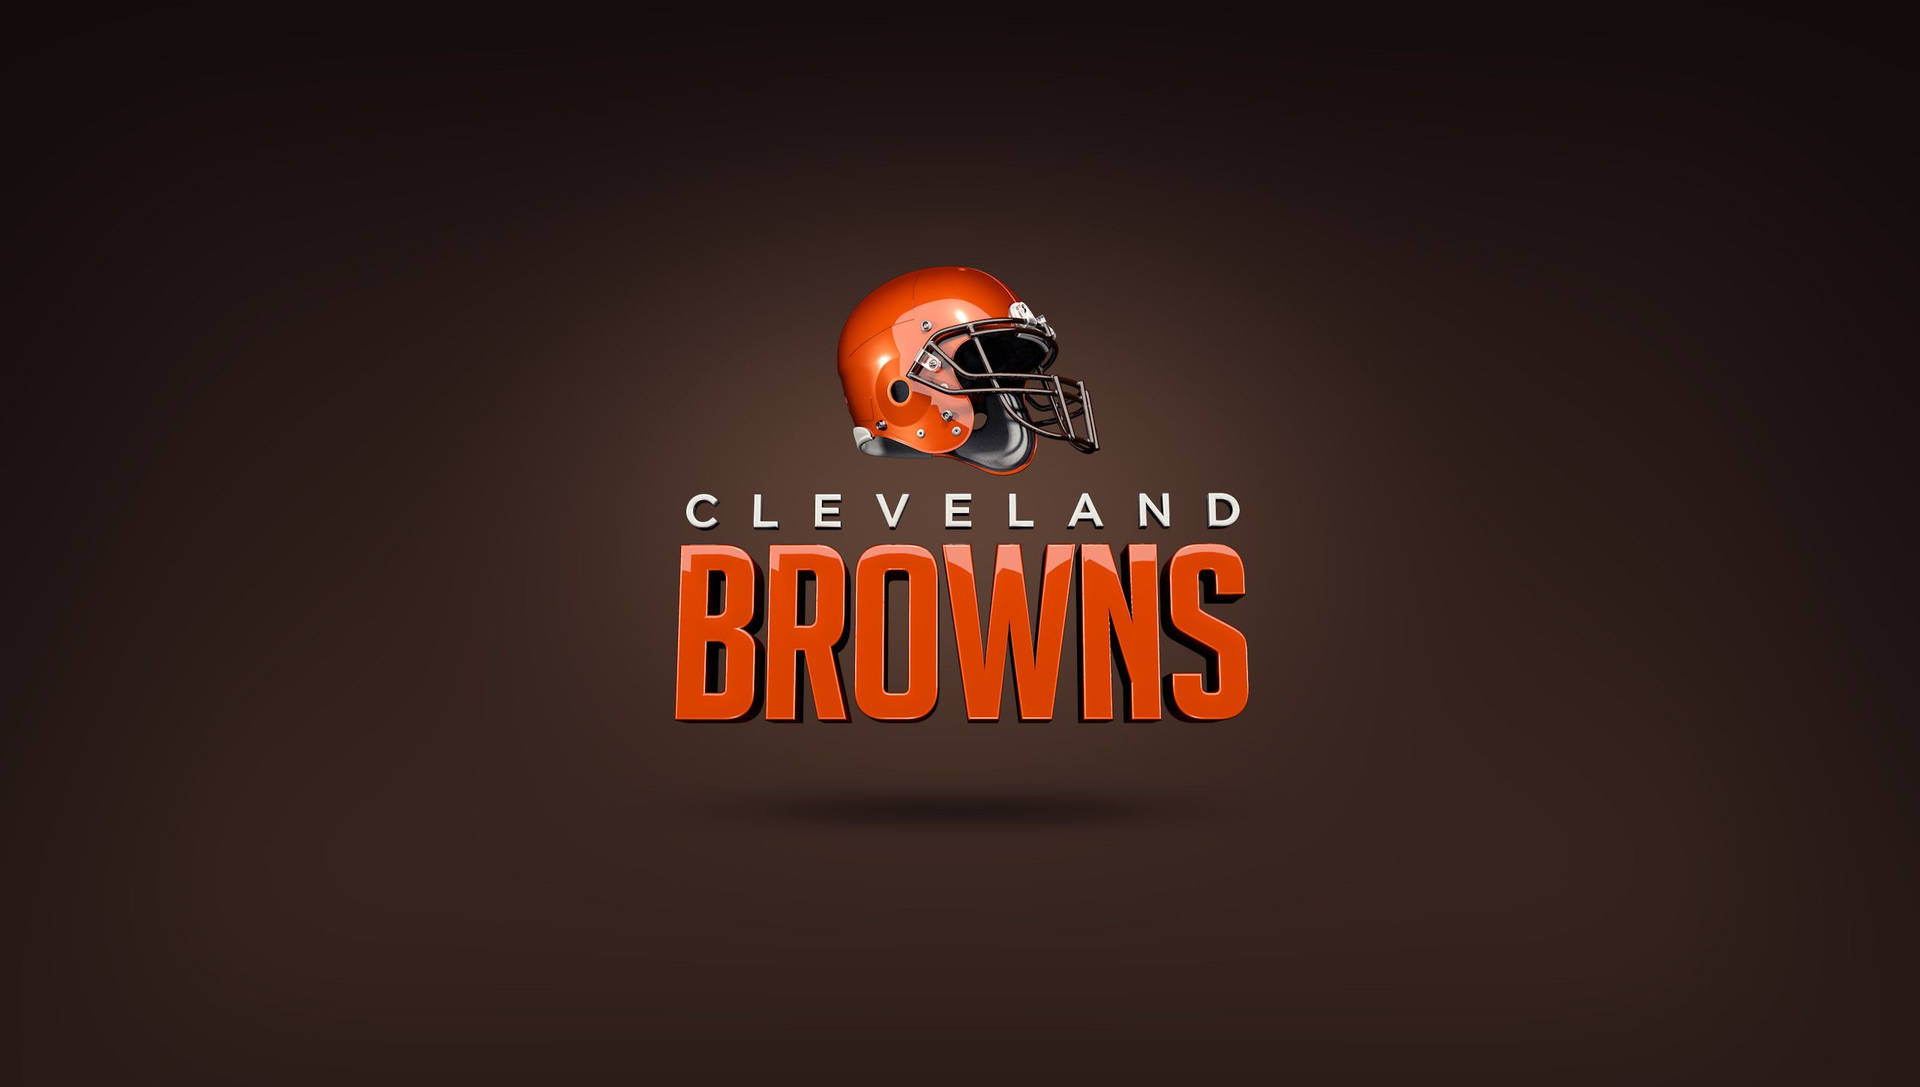 Cleveland Browns Team Background